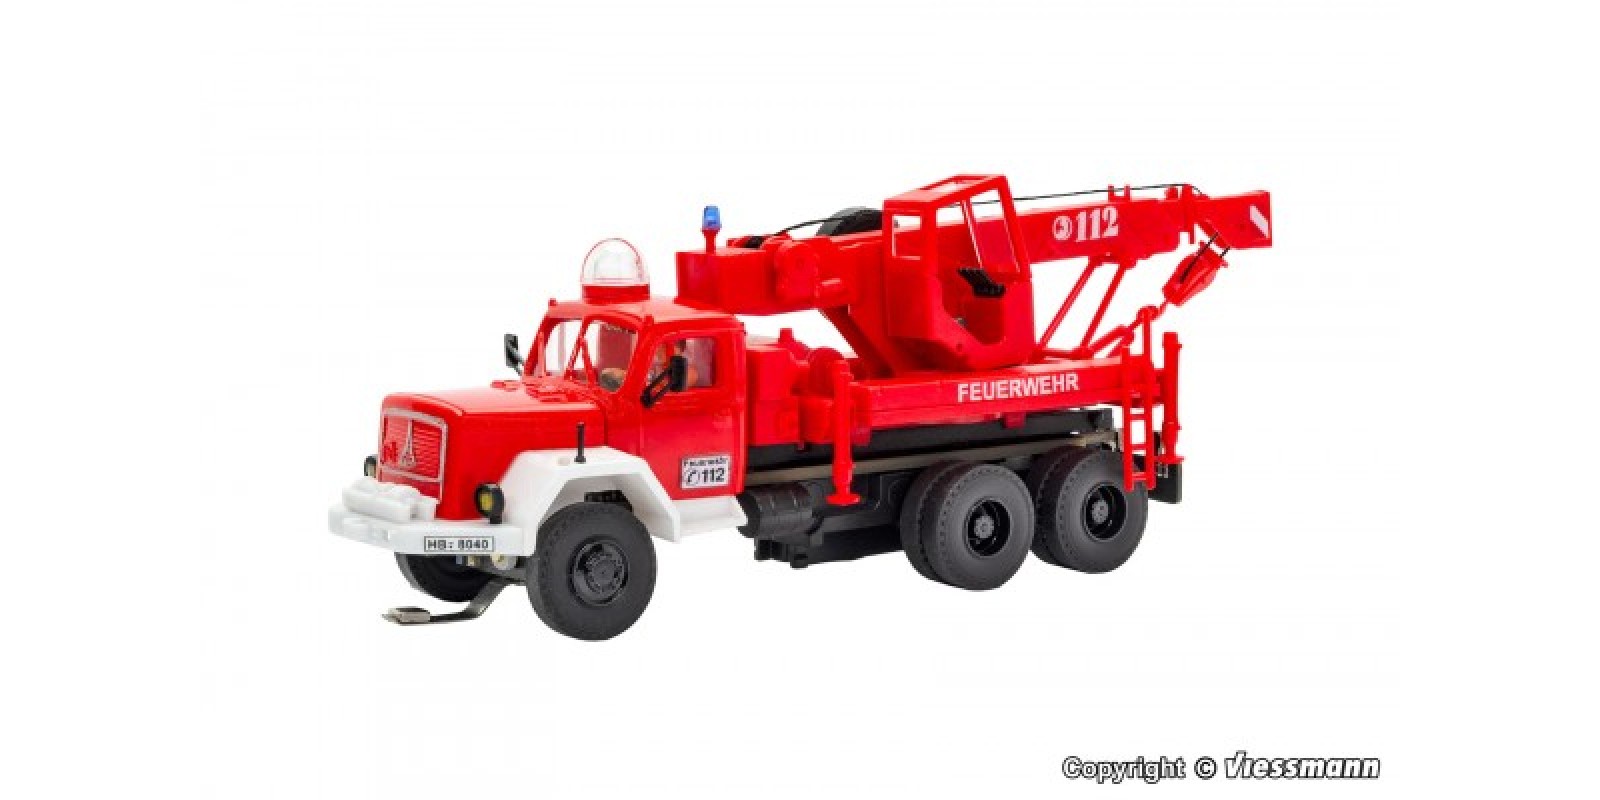 VI8051 H0 Fire brigade MAGIRUS DEUTZ 3-axle recovery crane, basic, functional model